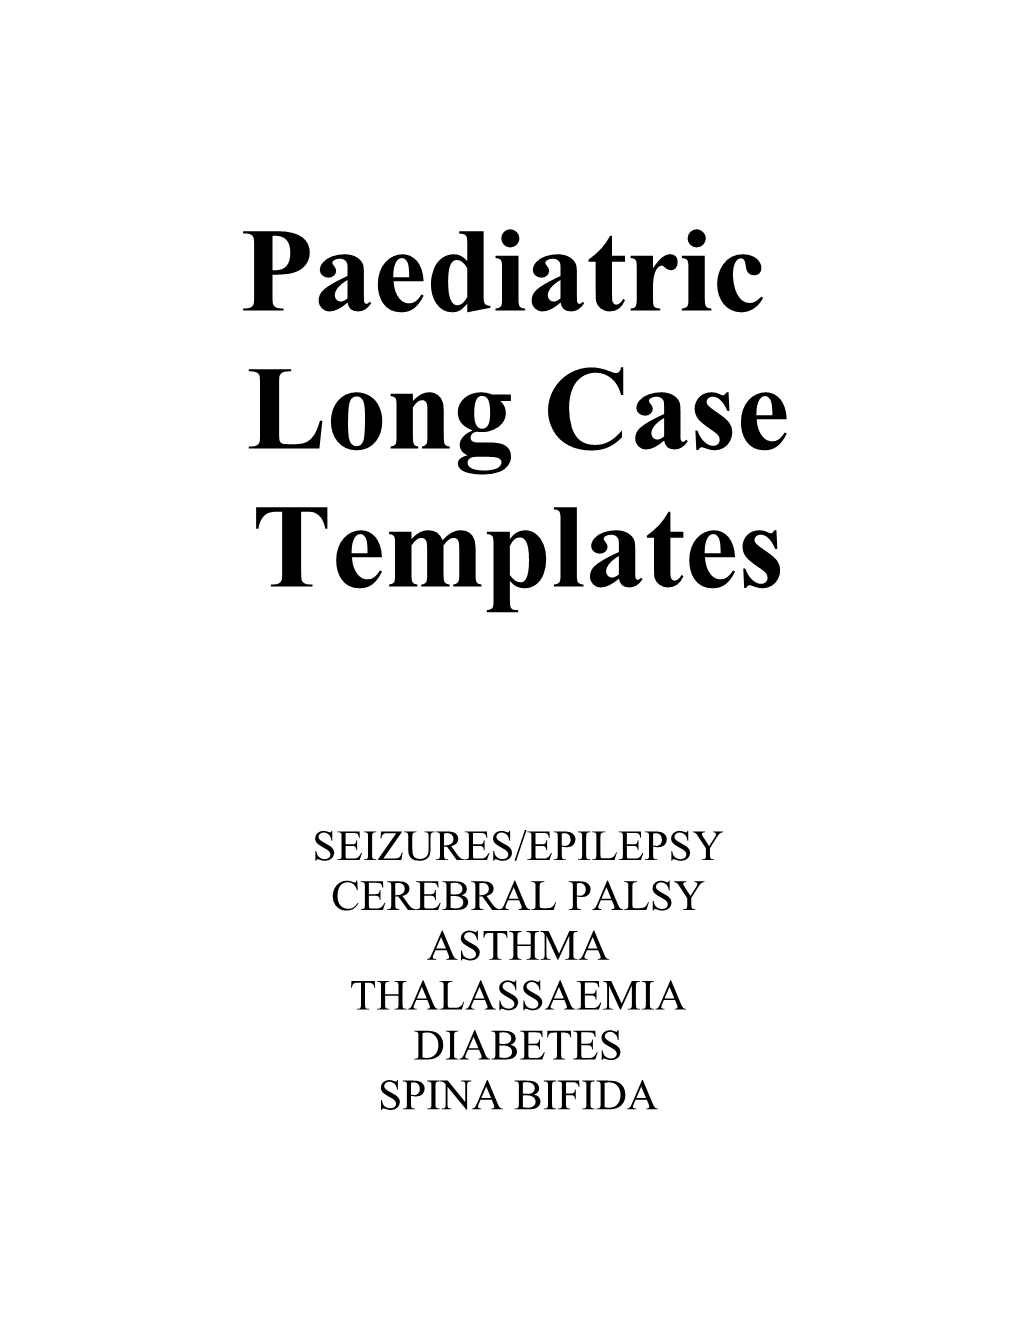 Paediatrics Long Case Templates